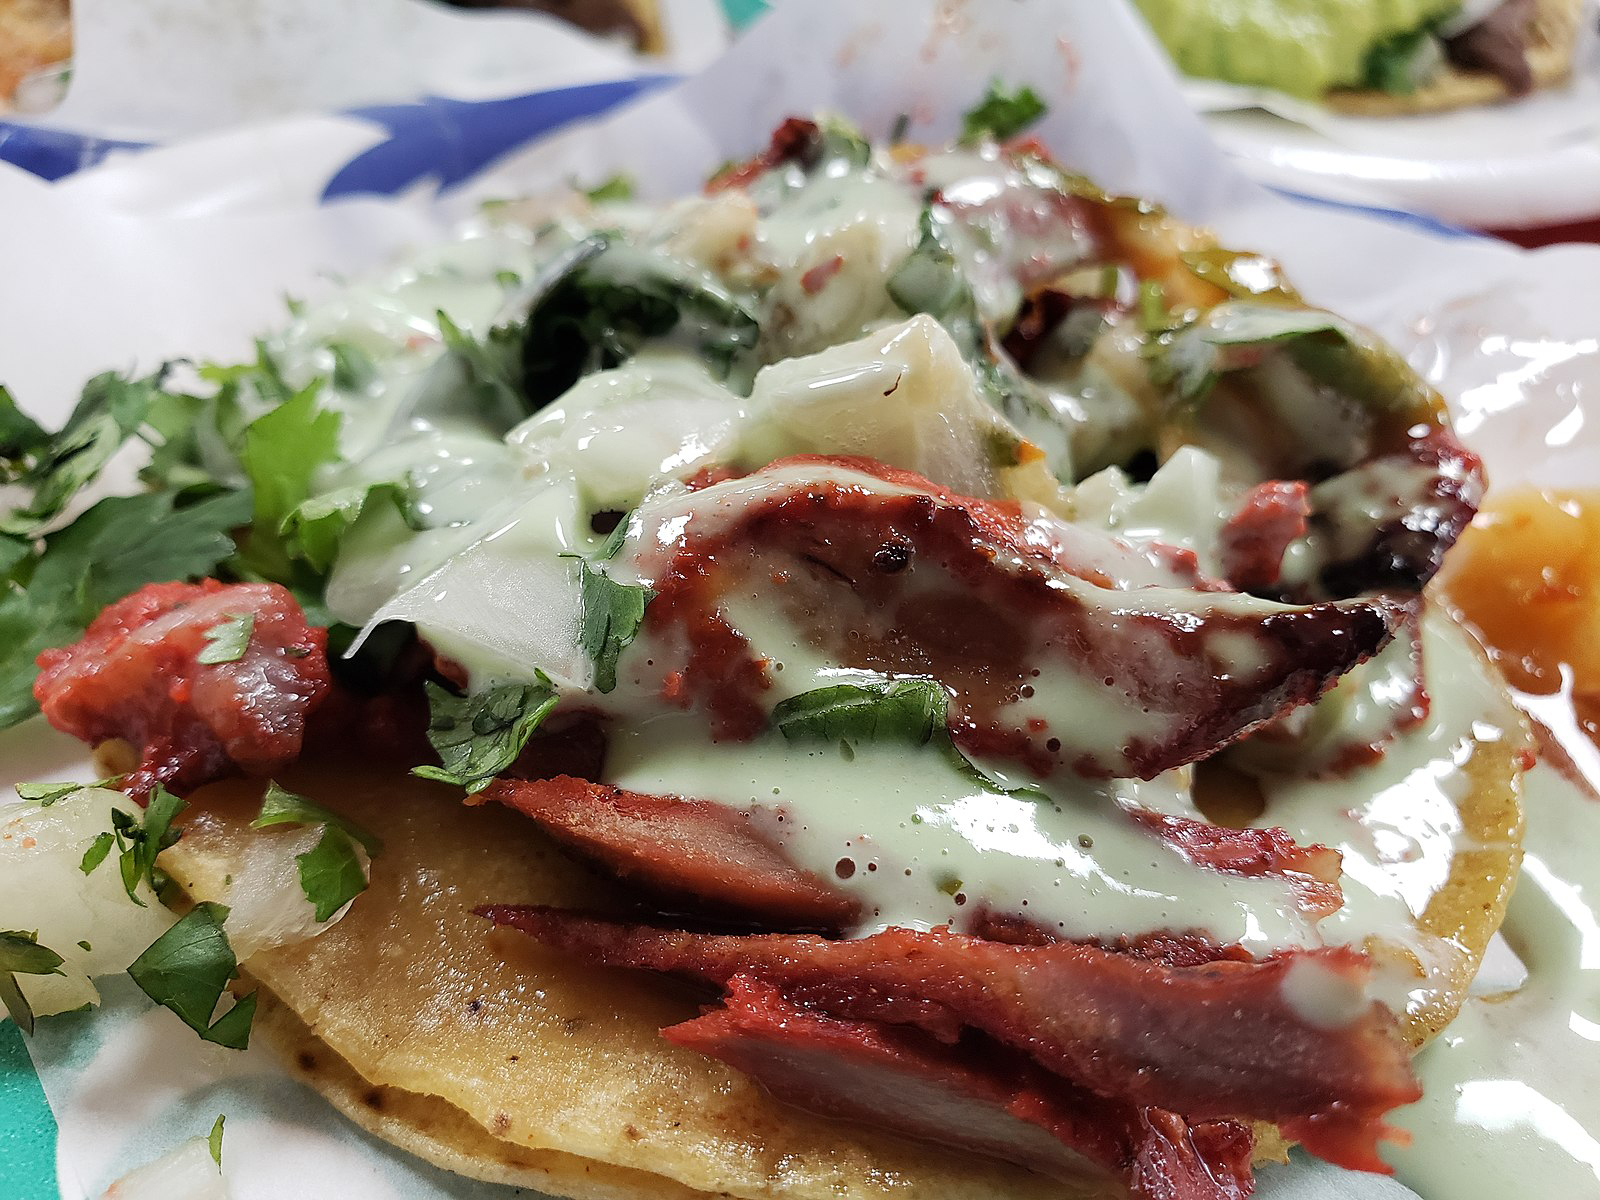 Tacos de Adobada | Traditional Street Food From Mexico